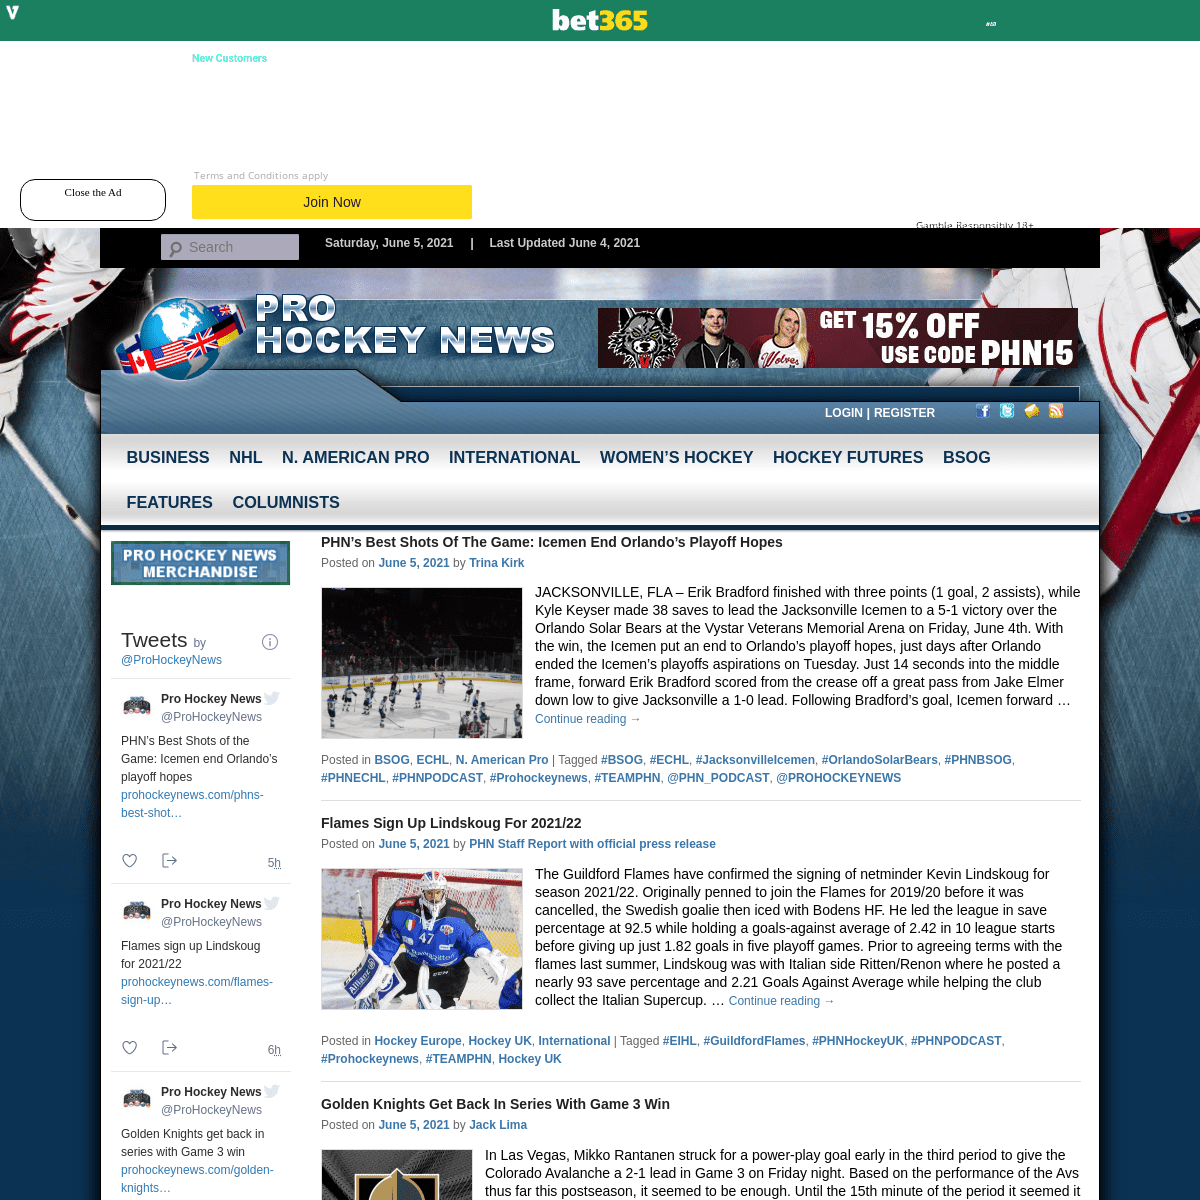 A complete backup of https://prohockeynews.com